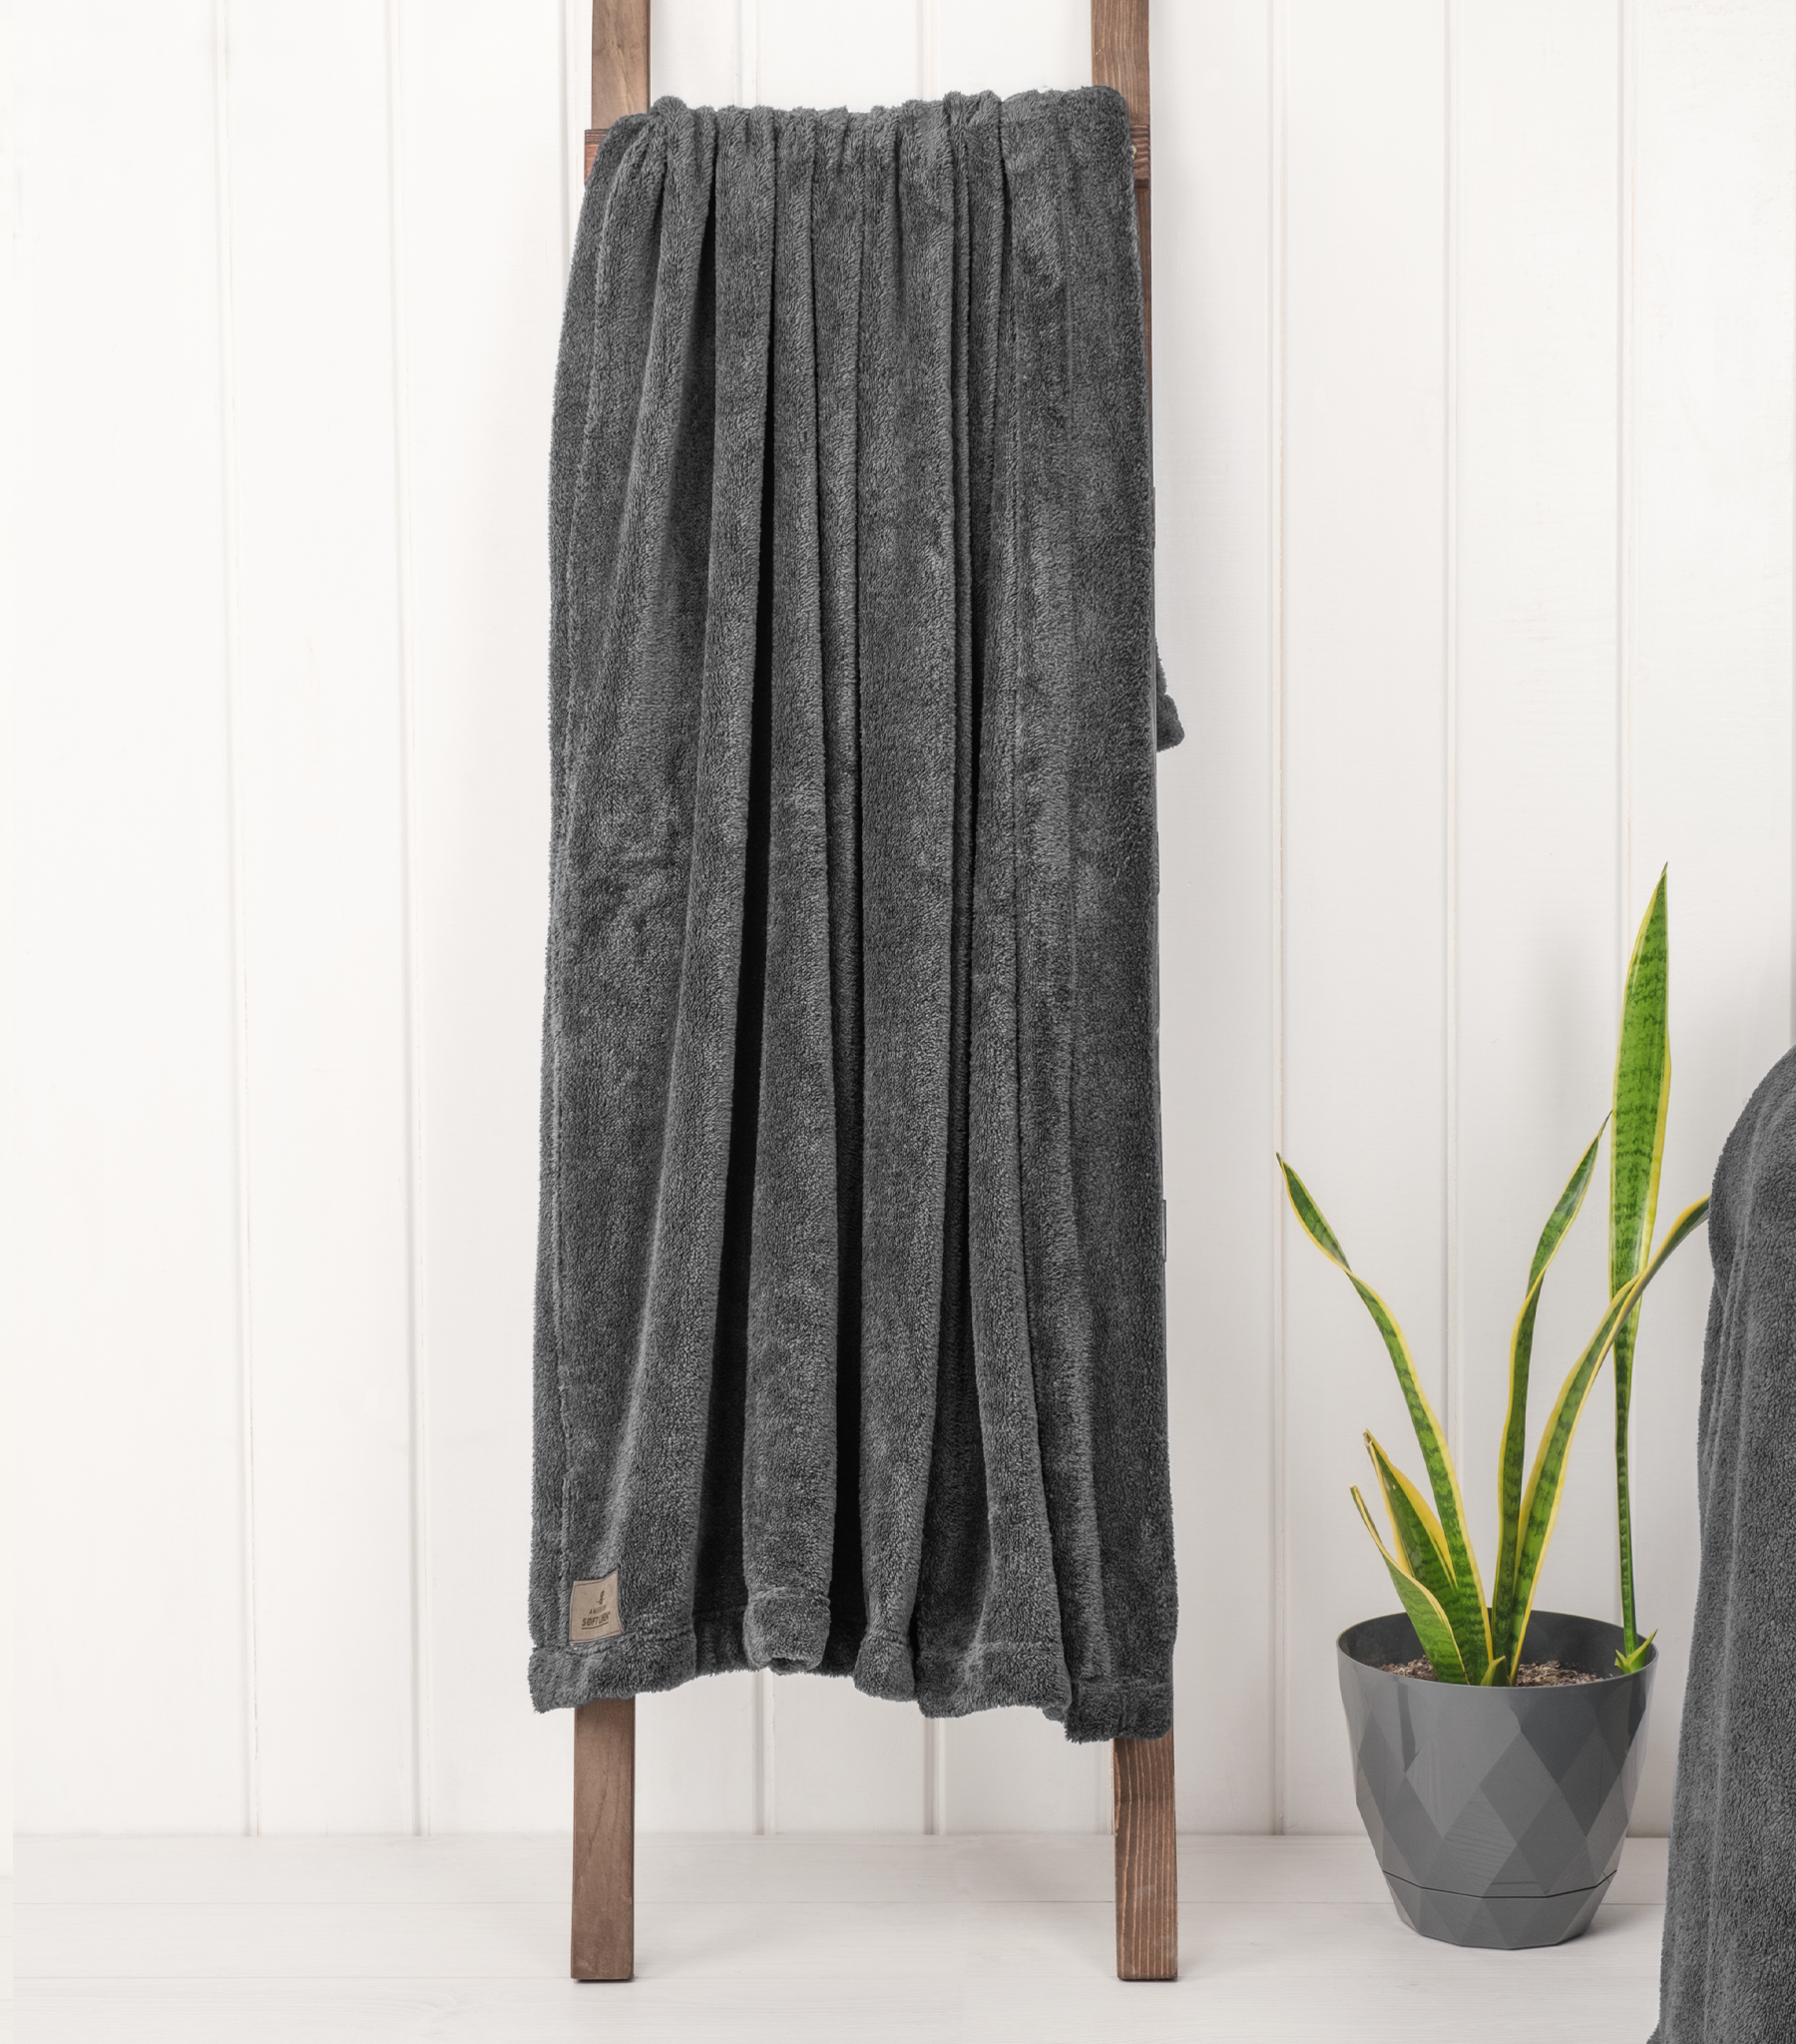 American Soft Linen - Bedding Fleece Blanket - Throw Size 50x60 inches - Gray - 2